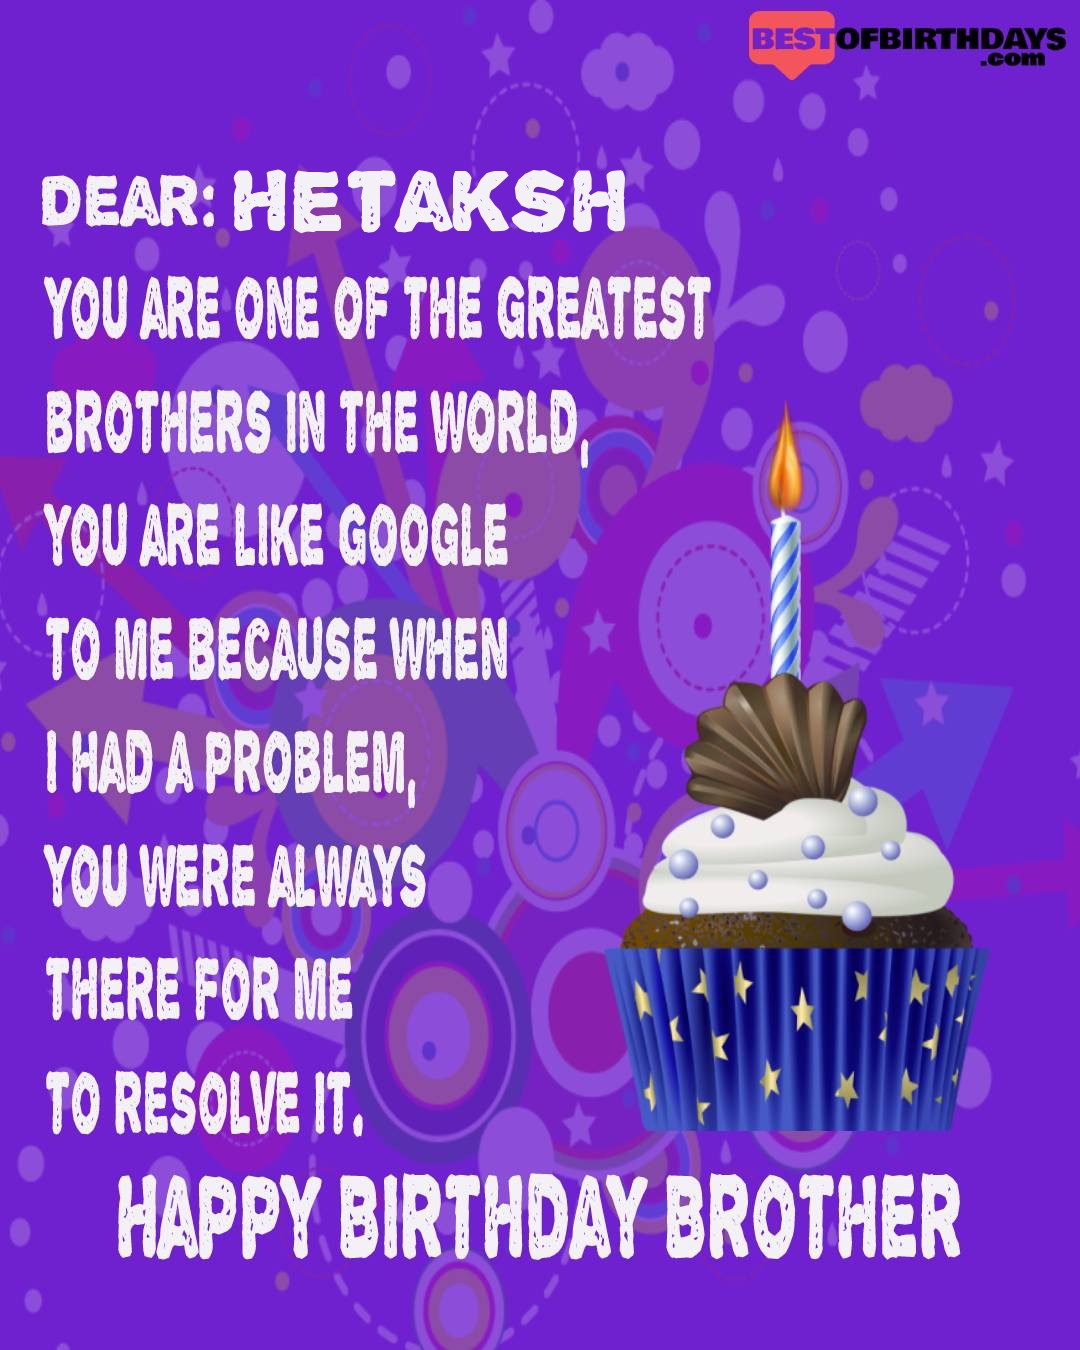 Happy birthday hetaksh bhai brother bro